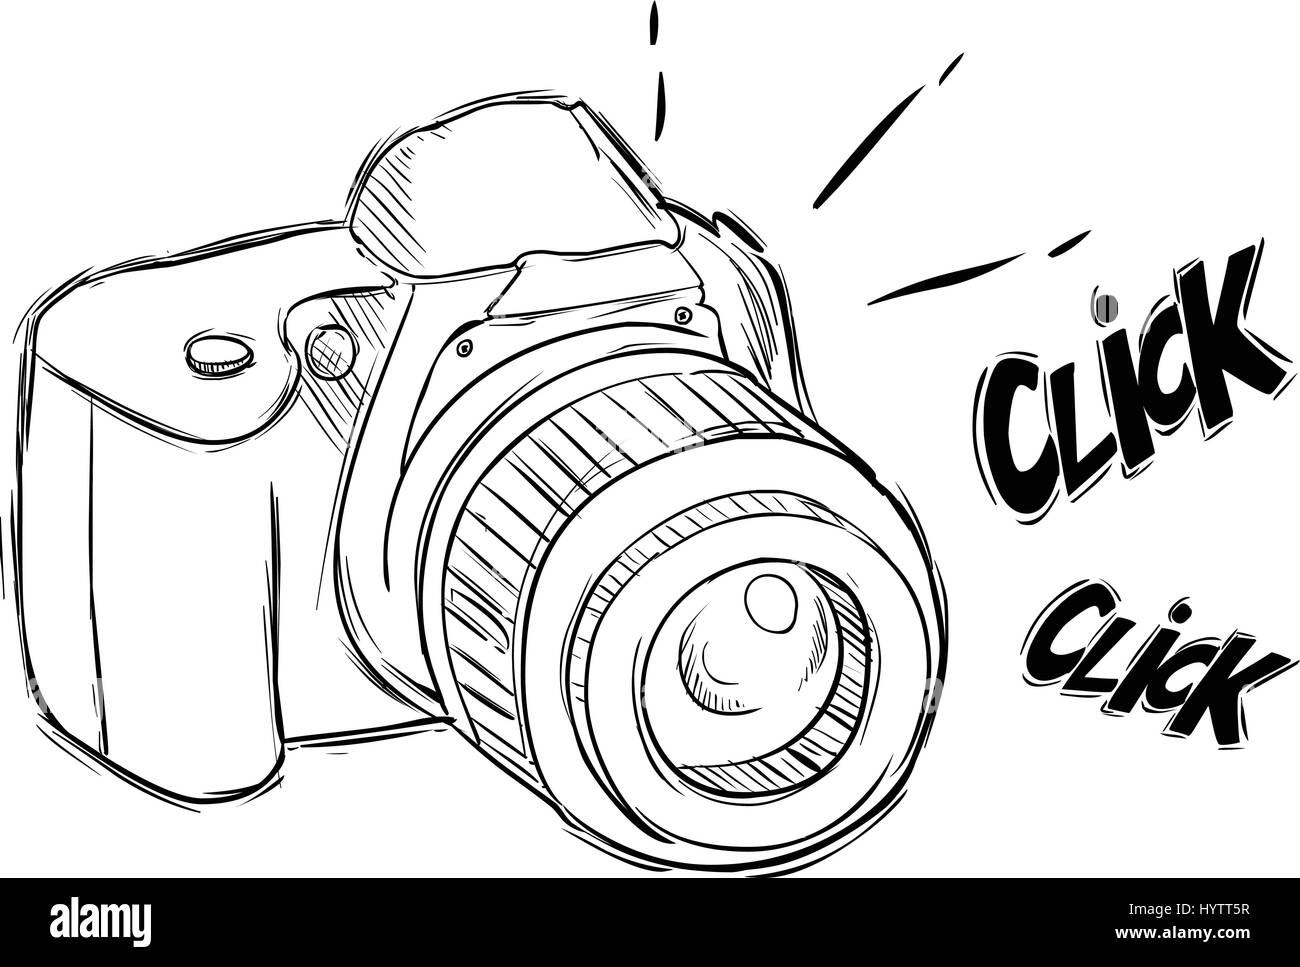 Vector Hand Drawn Sketch Professional Camera, Photocamera. Royalty Free  SVG, Cliparts, Vectors, and Stock Illustration. Image 124506317.